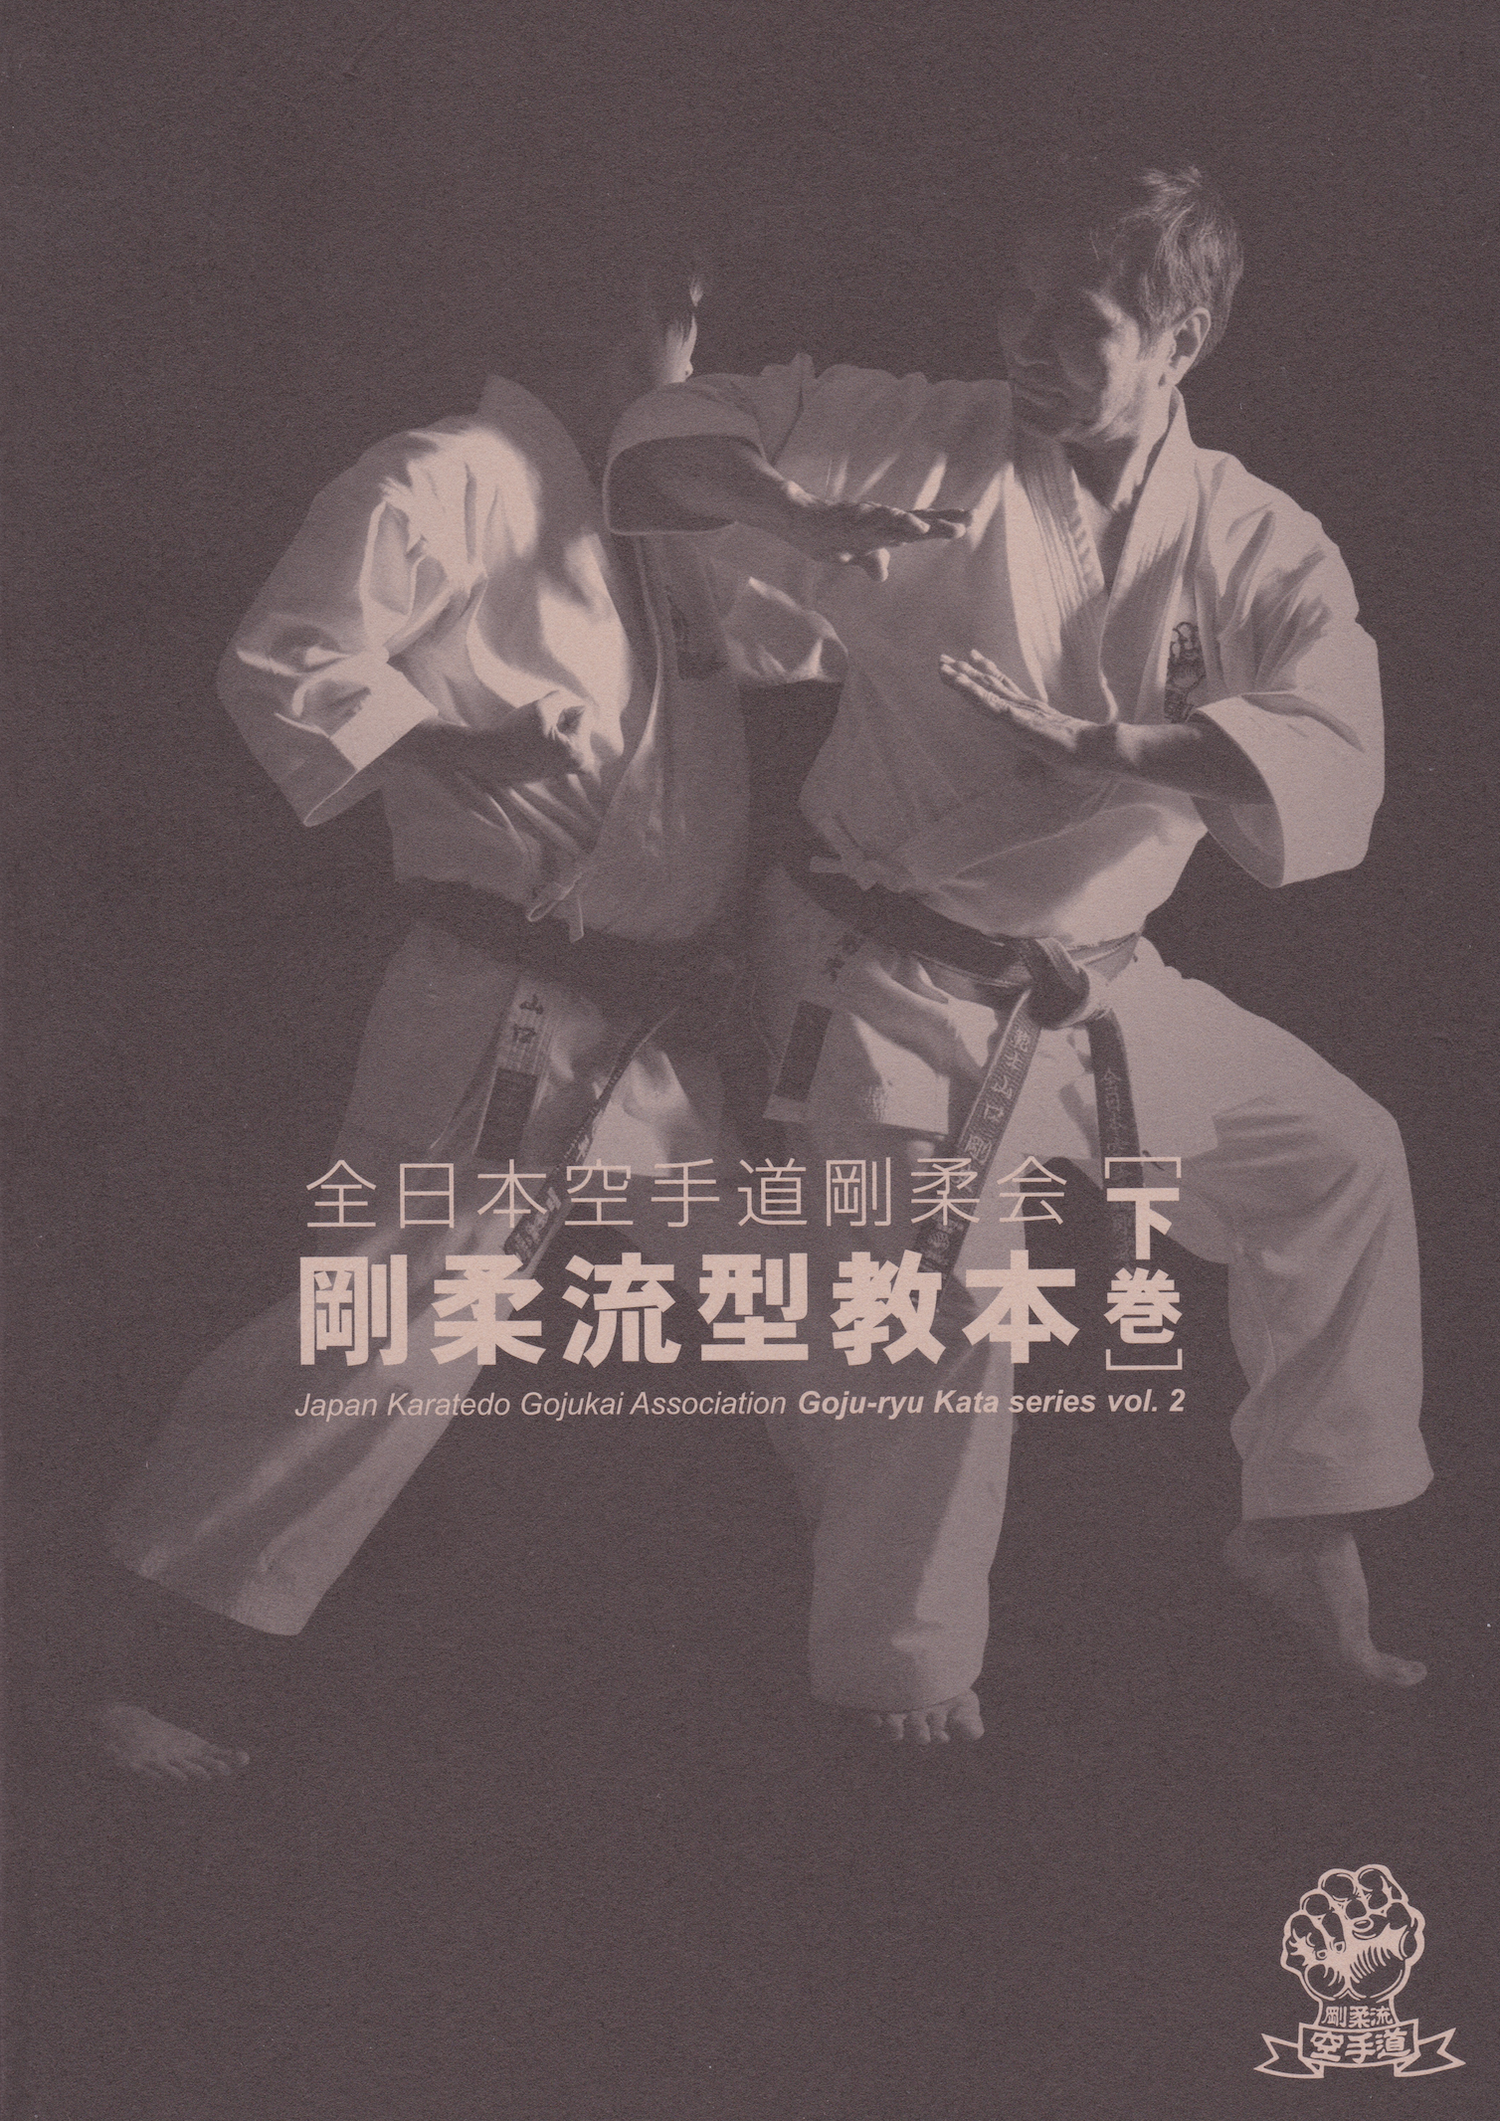 Serie Goju Ryu Kata Libro 2 de la Asociación Japonesa Karatedo Gojukai